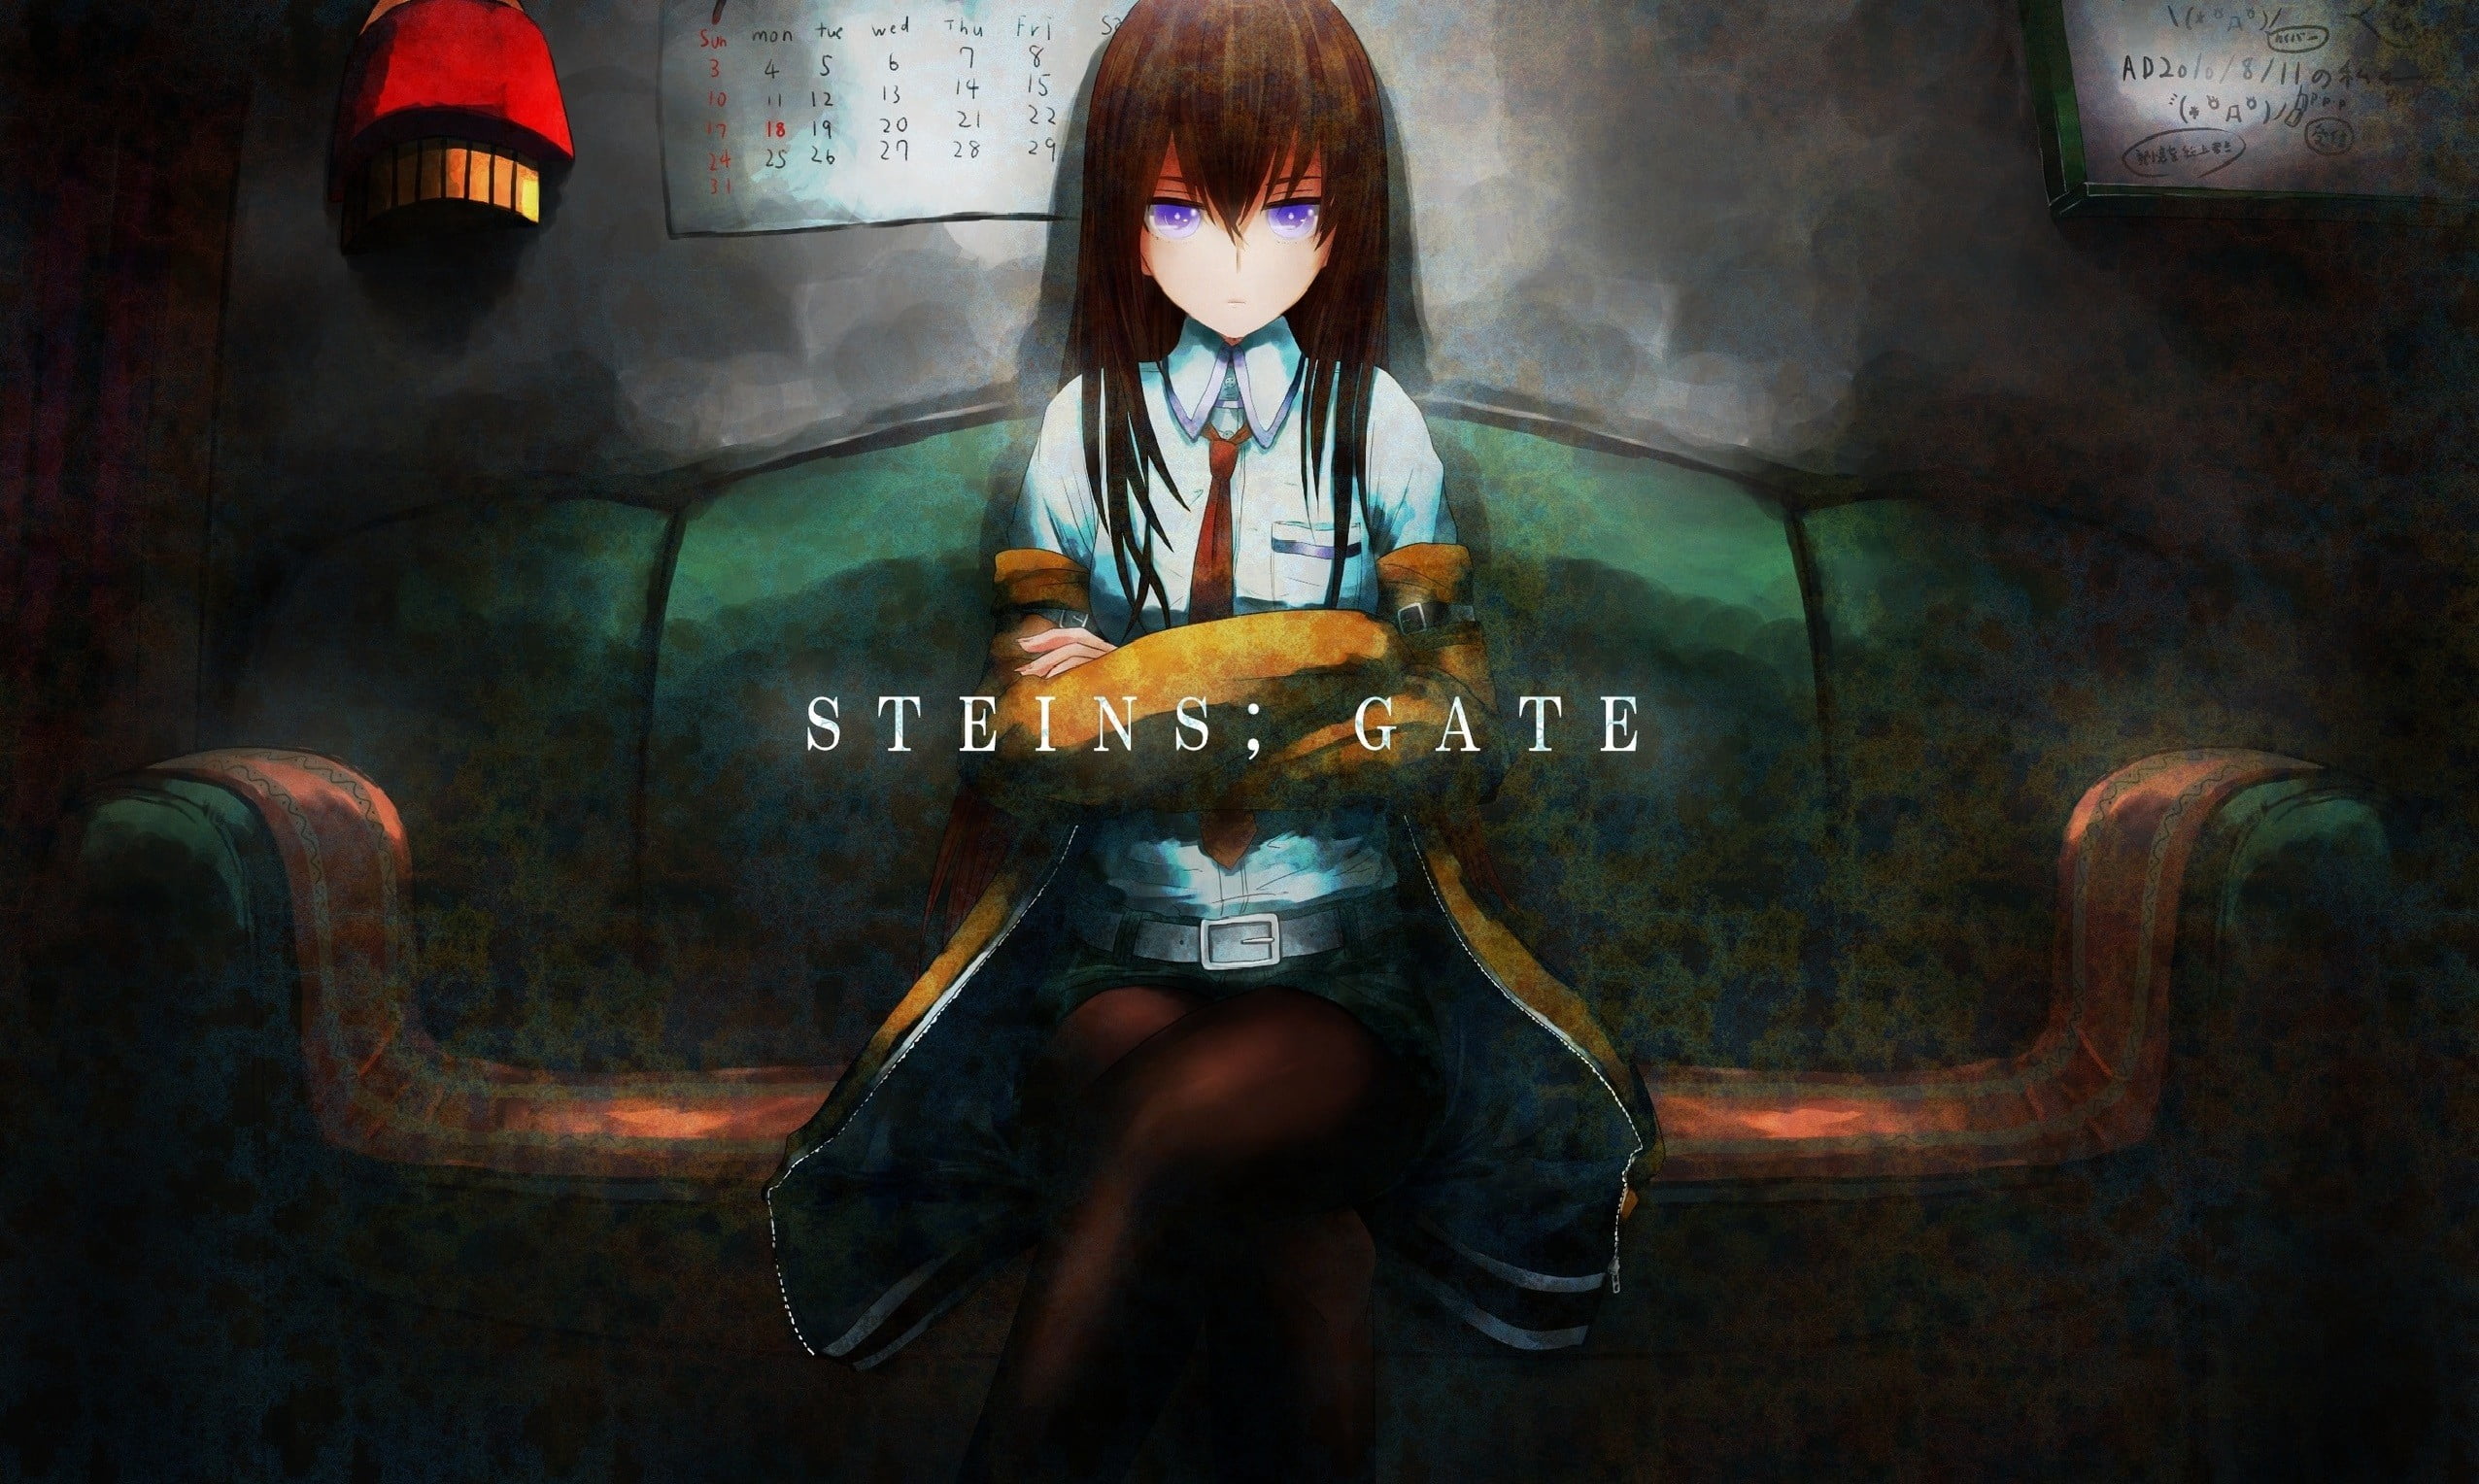 Steins;Gate, Makise Kurisu, anime girls, one person, front view